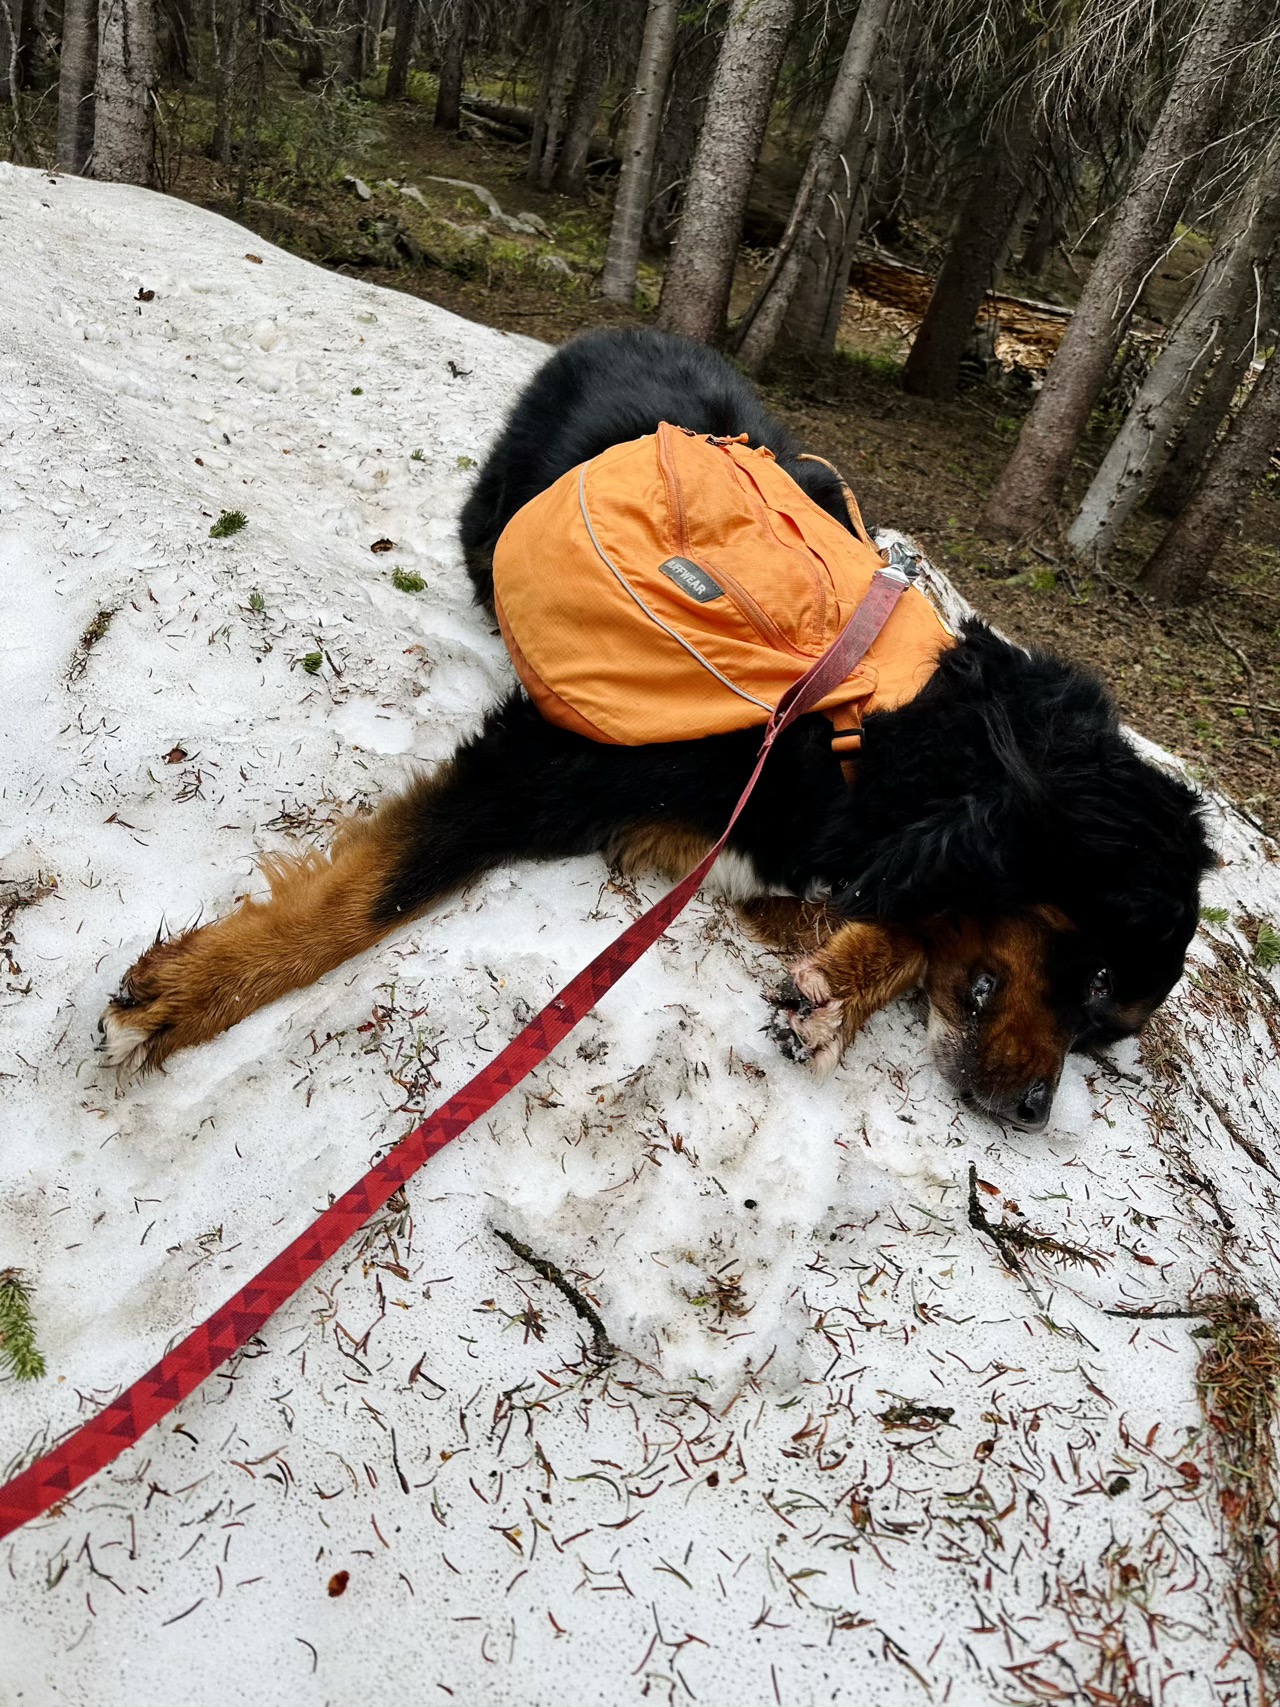 Lyra missed the snow